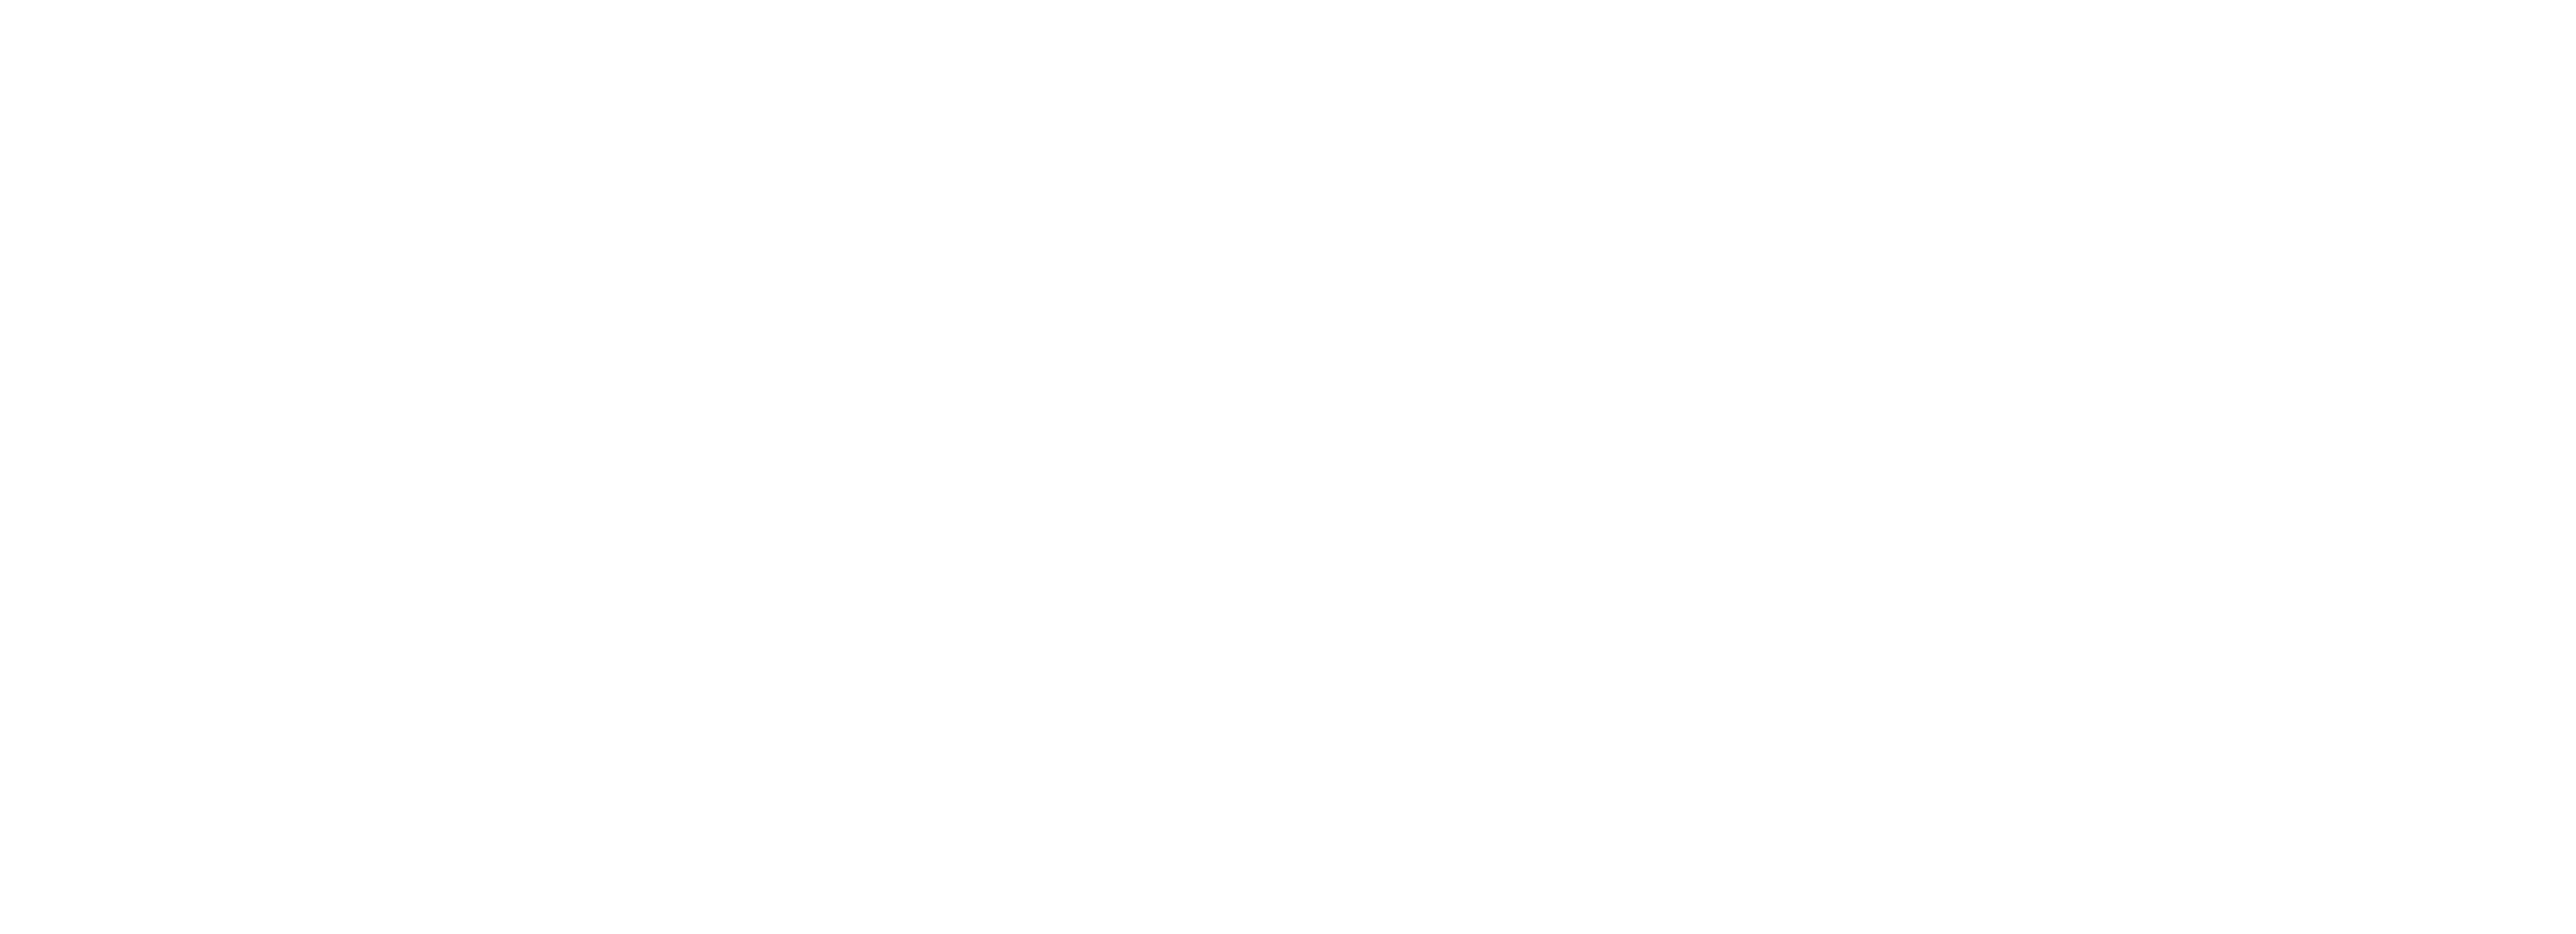 Coronalert